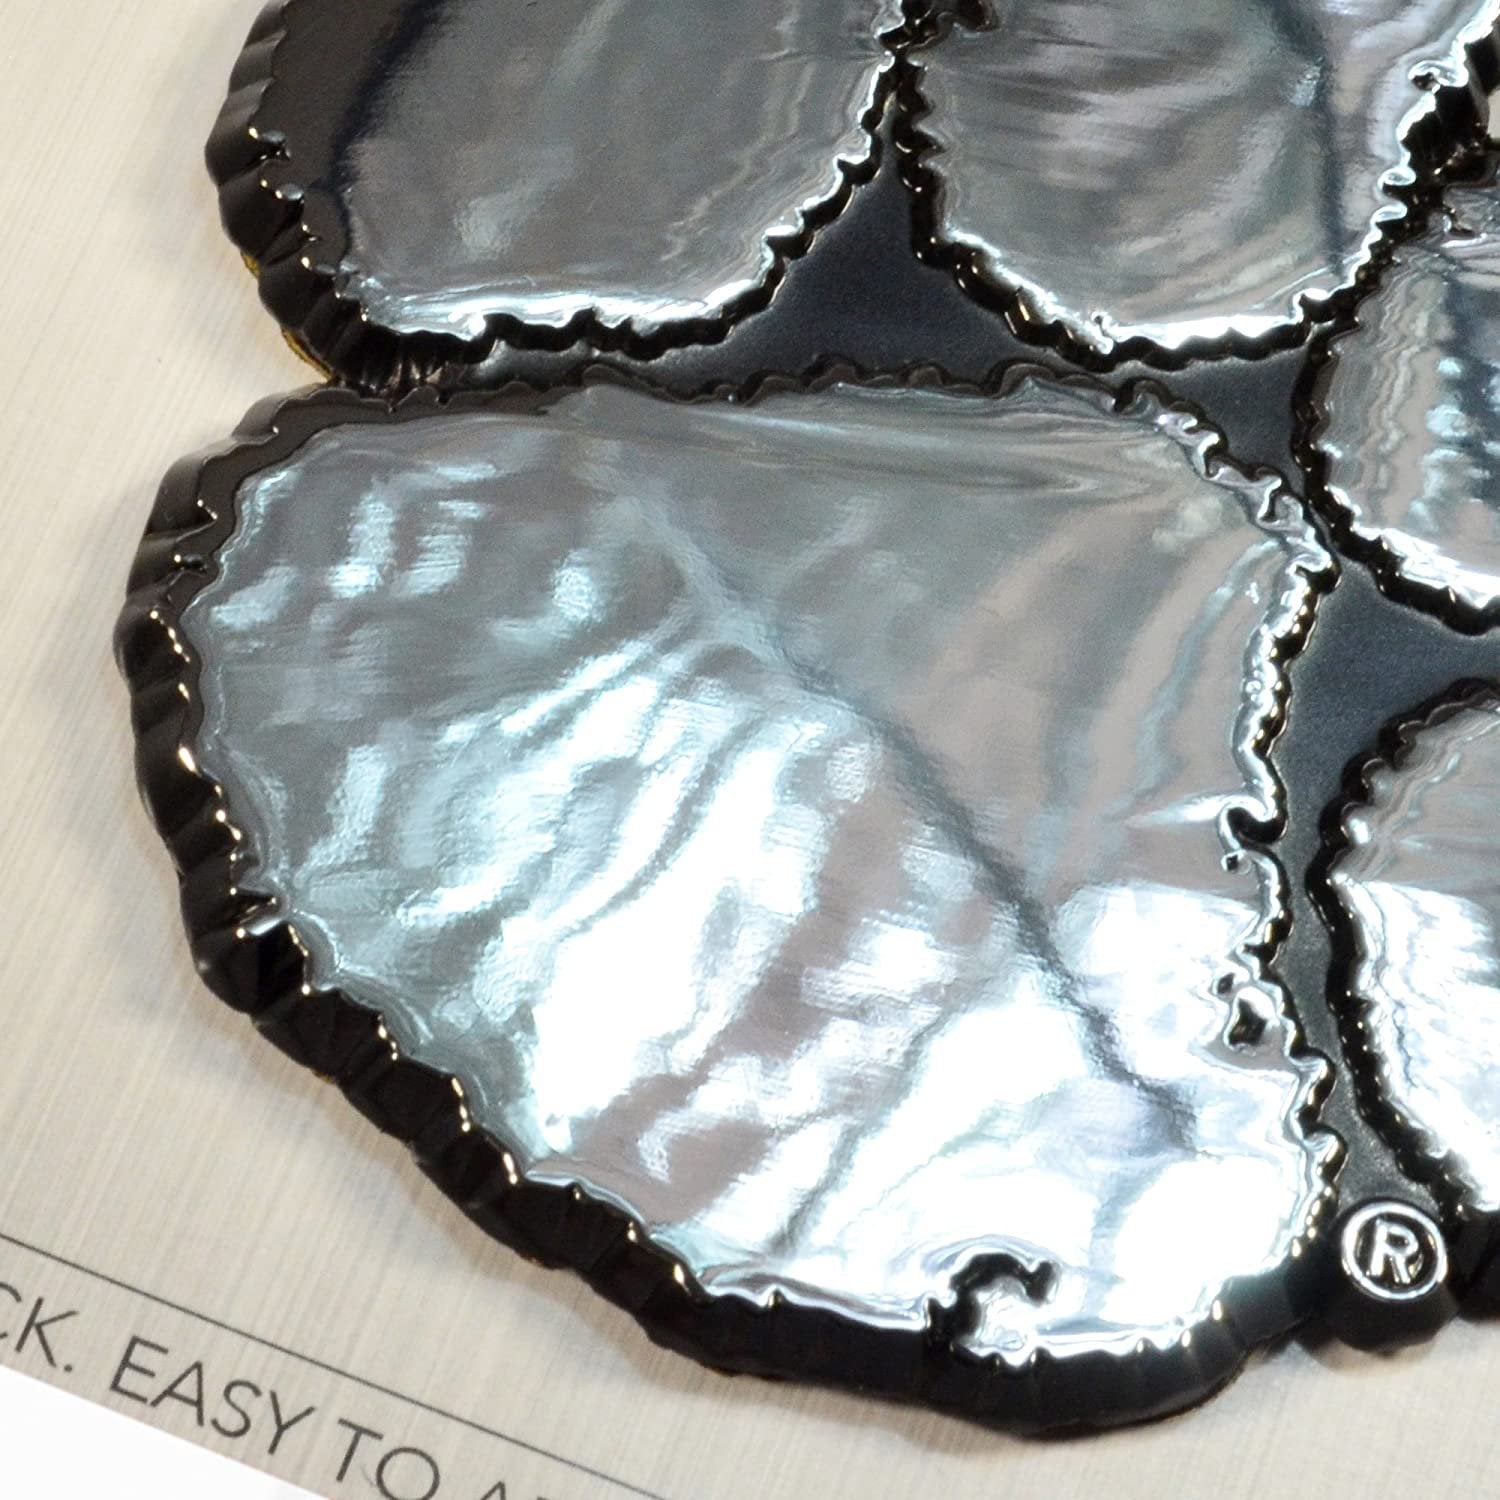 Toronto Blue Jays Solid Metal Raised Auto Emblem Decal Adhesive Backing